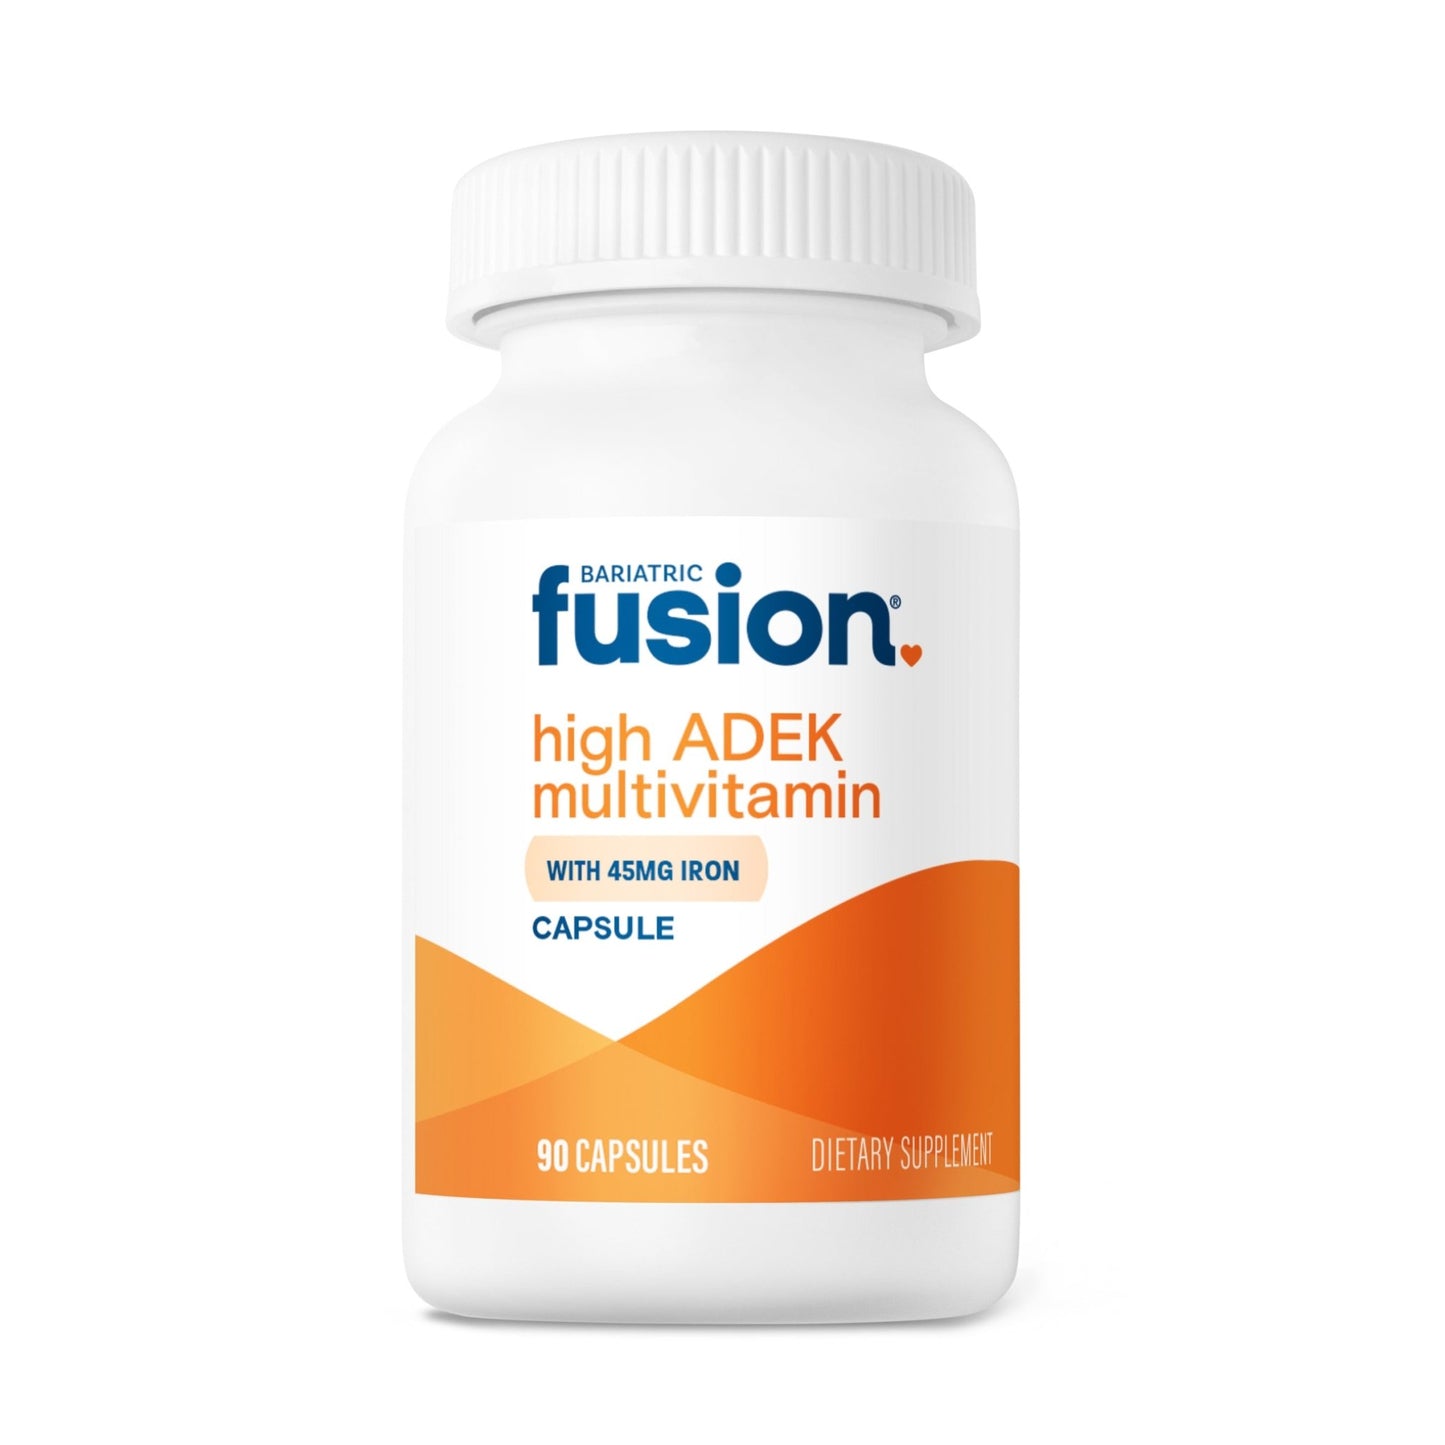 Bariatric High ADEK Vitamin Capsule with 45mg IRON 90 capsules.